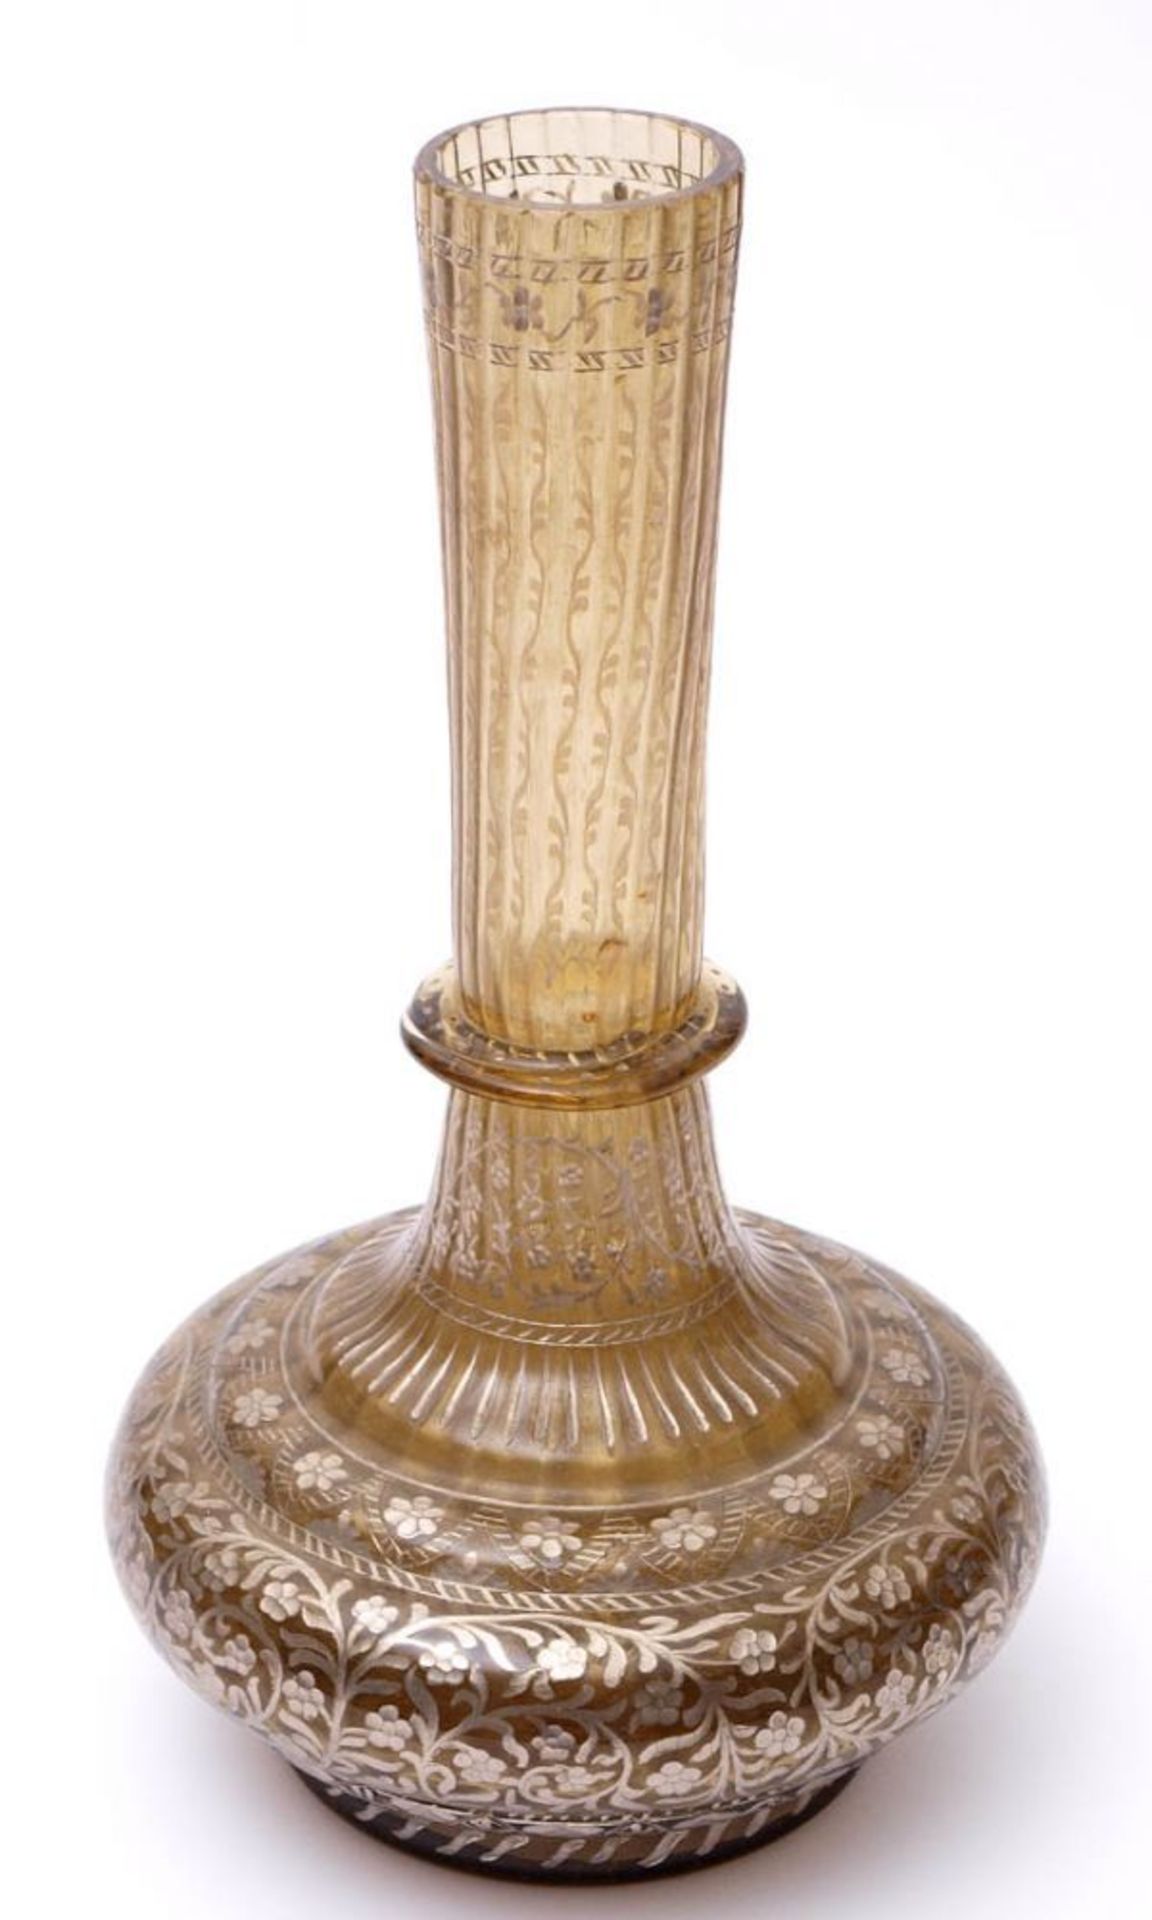 Vase, wohl Köln-Ehrenfeld, 2. Hälfte 19.Jhdt. Linsenförmiger, gegliederter Korpus. Gerippter